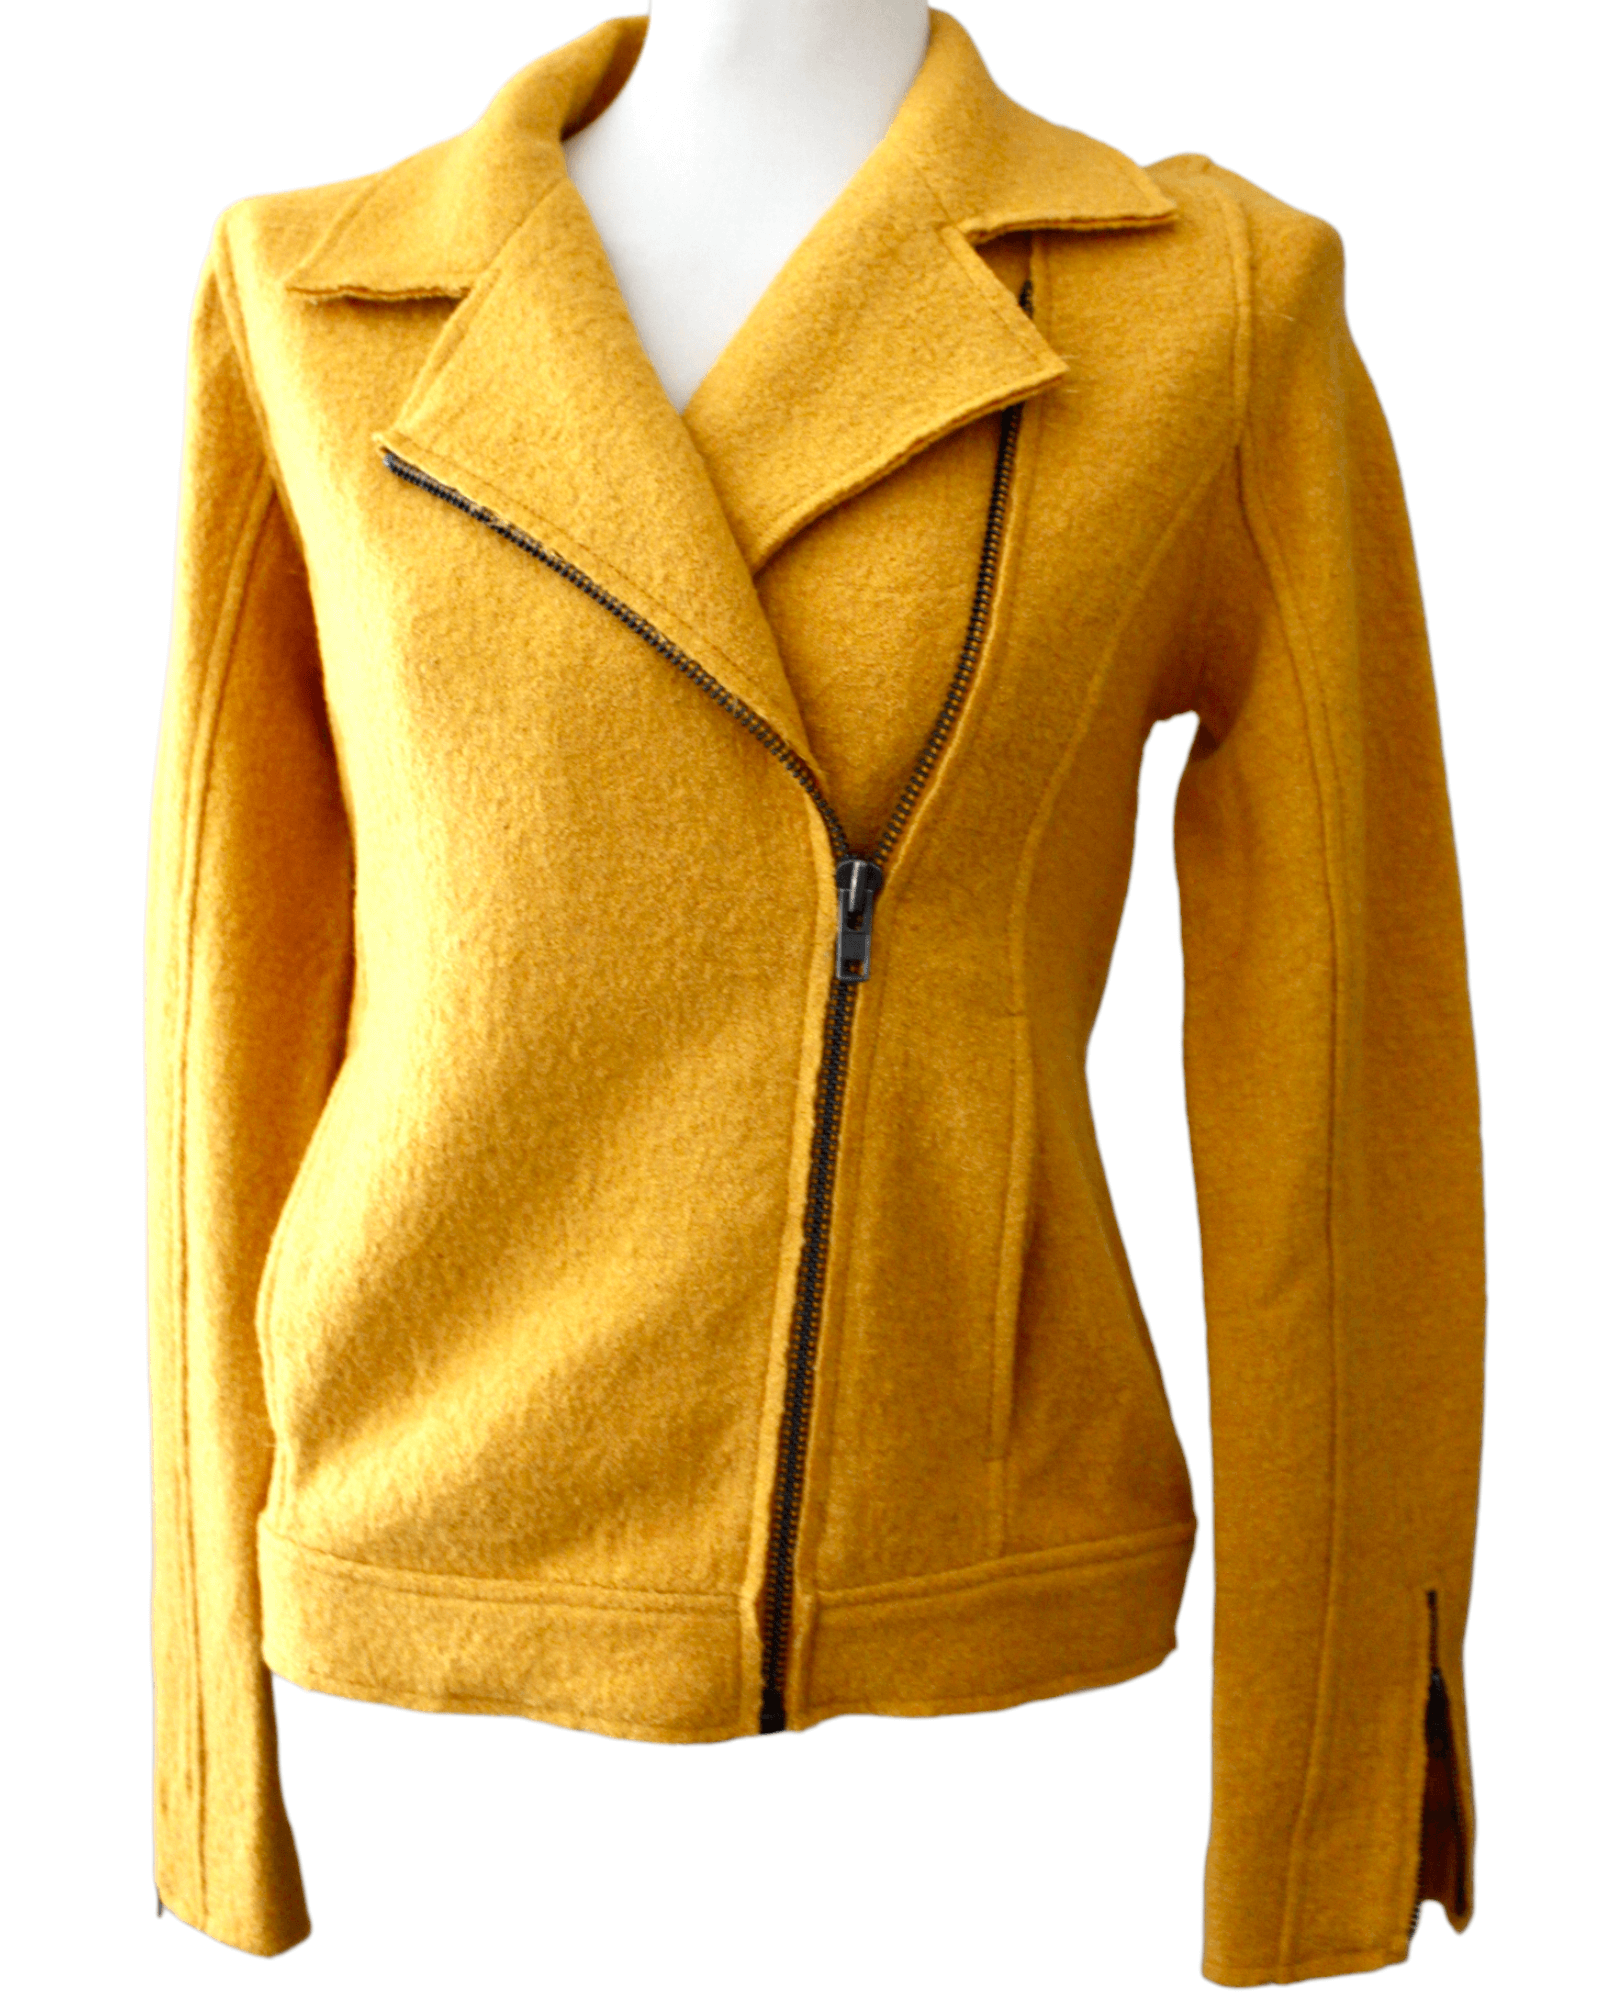 Bright Spring yellow wool jacket